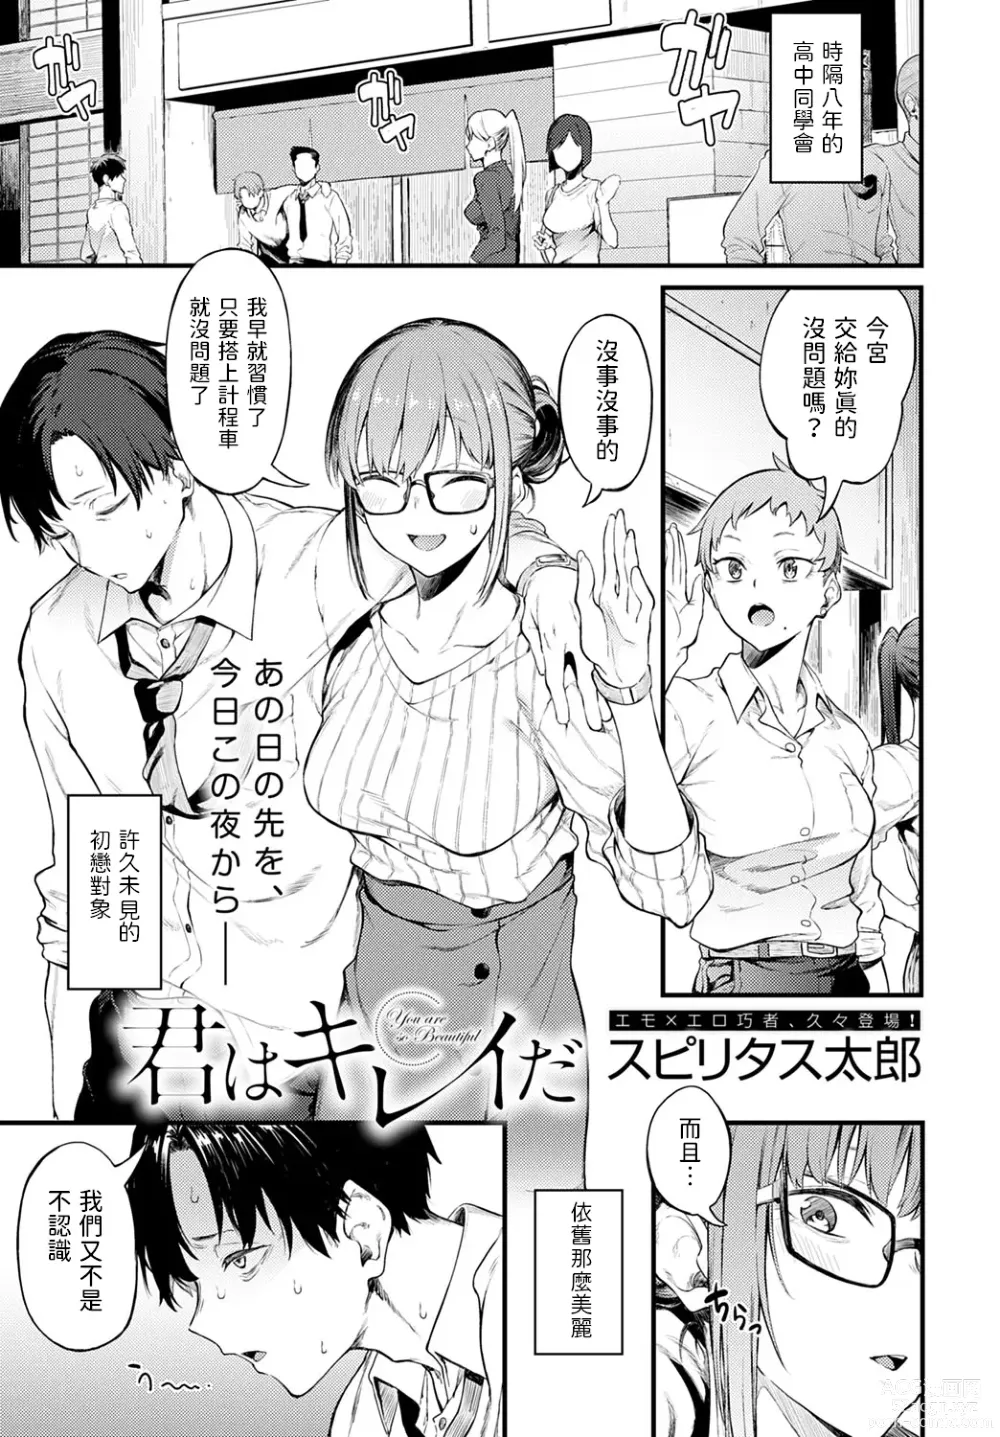 Page 1 of manga Kimi wa Kireida - You are so Beautiful